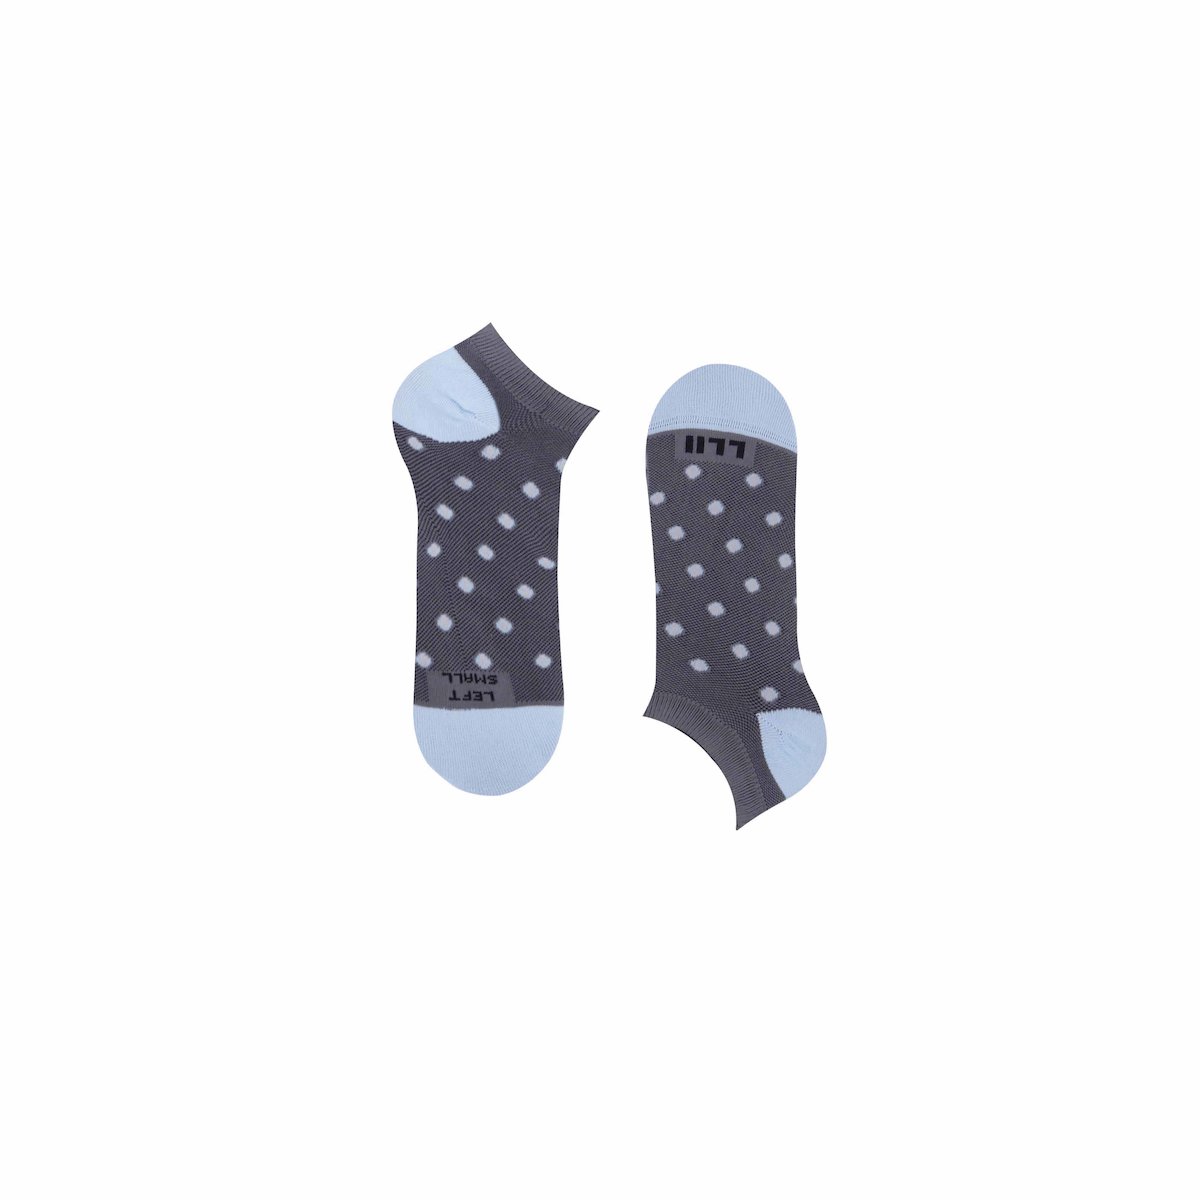 Double Dot Socks - 2 Pairs